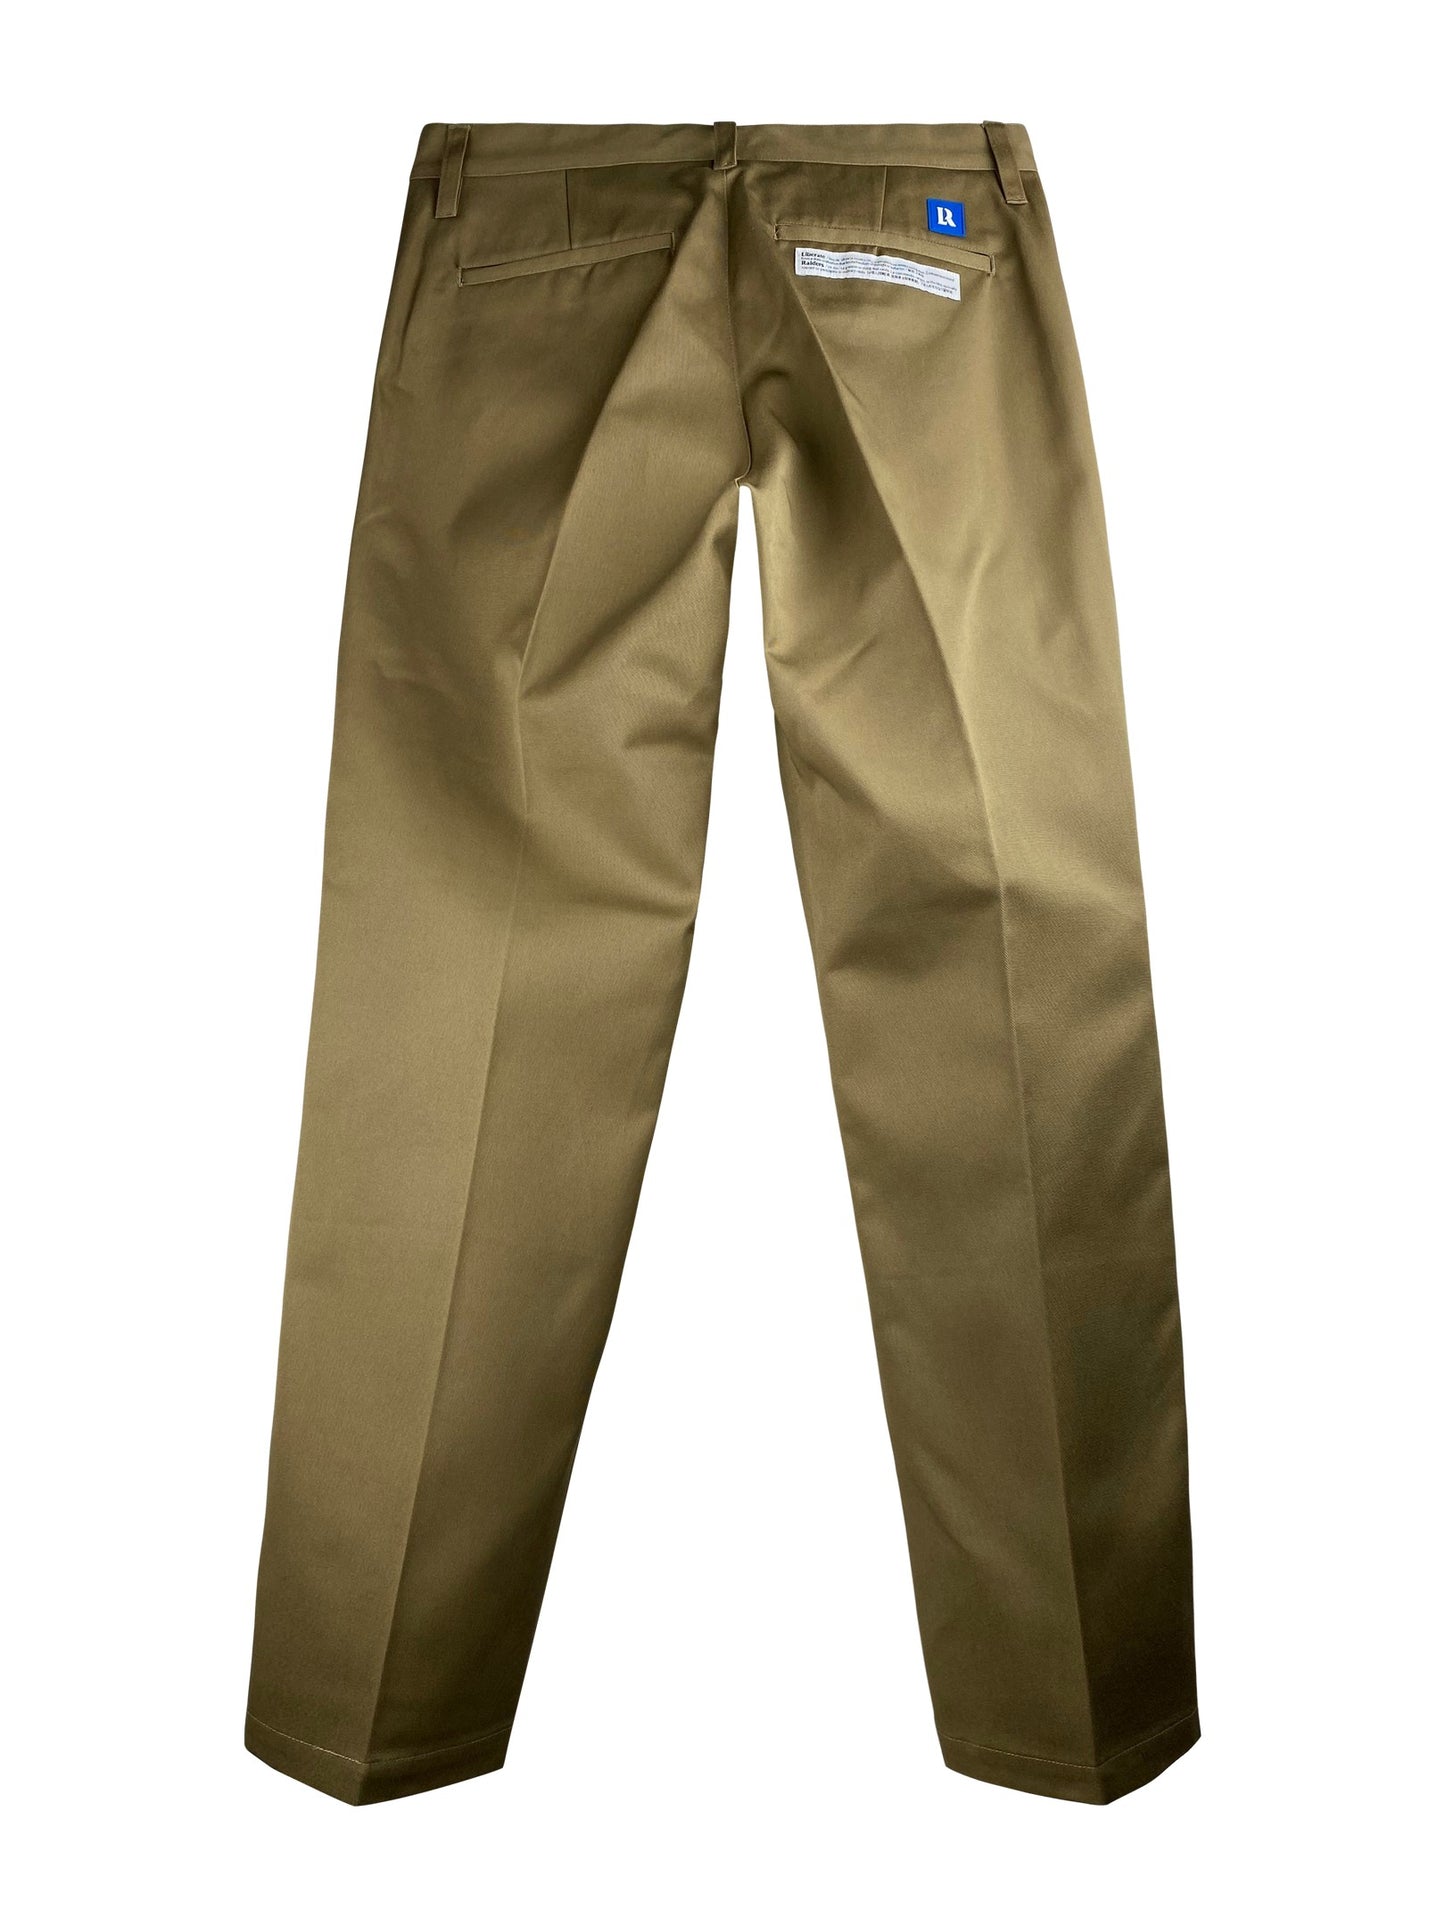 Liberaiders Hose "Chino Trousers" -beige